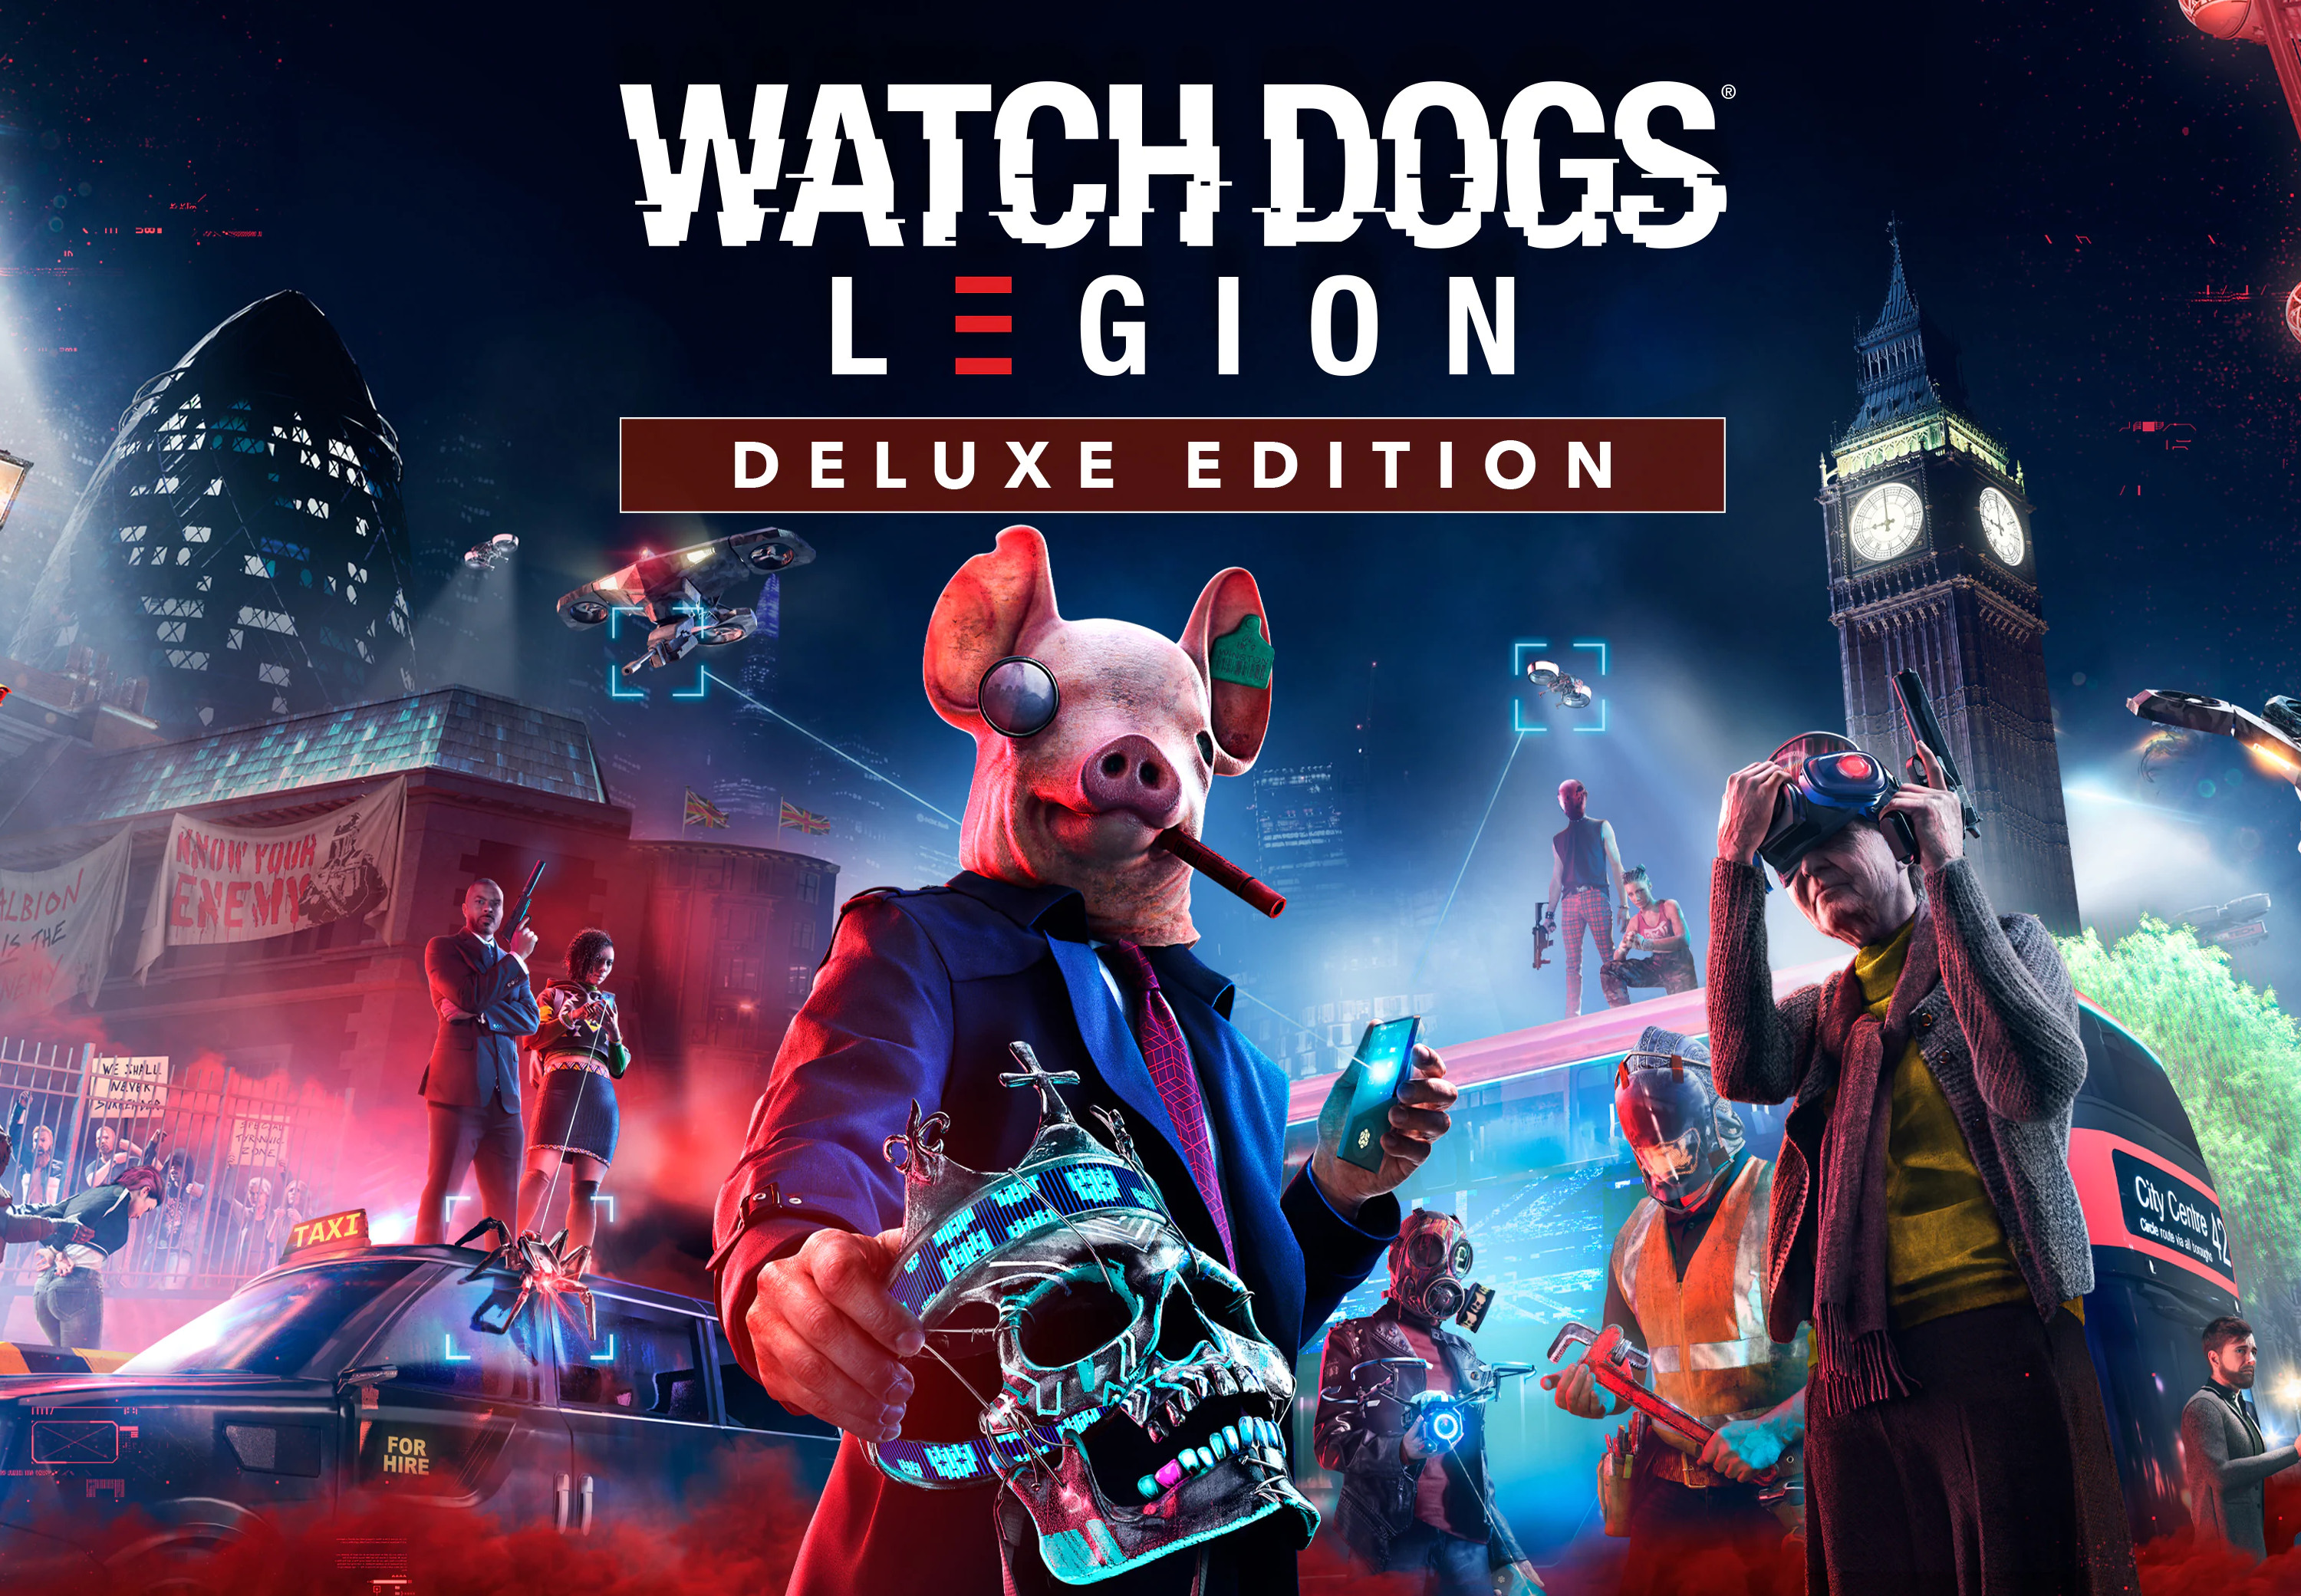 Buy cheap Watch Dogs Legion : Bloodline cd key - lowest price